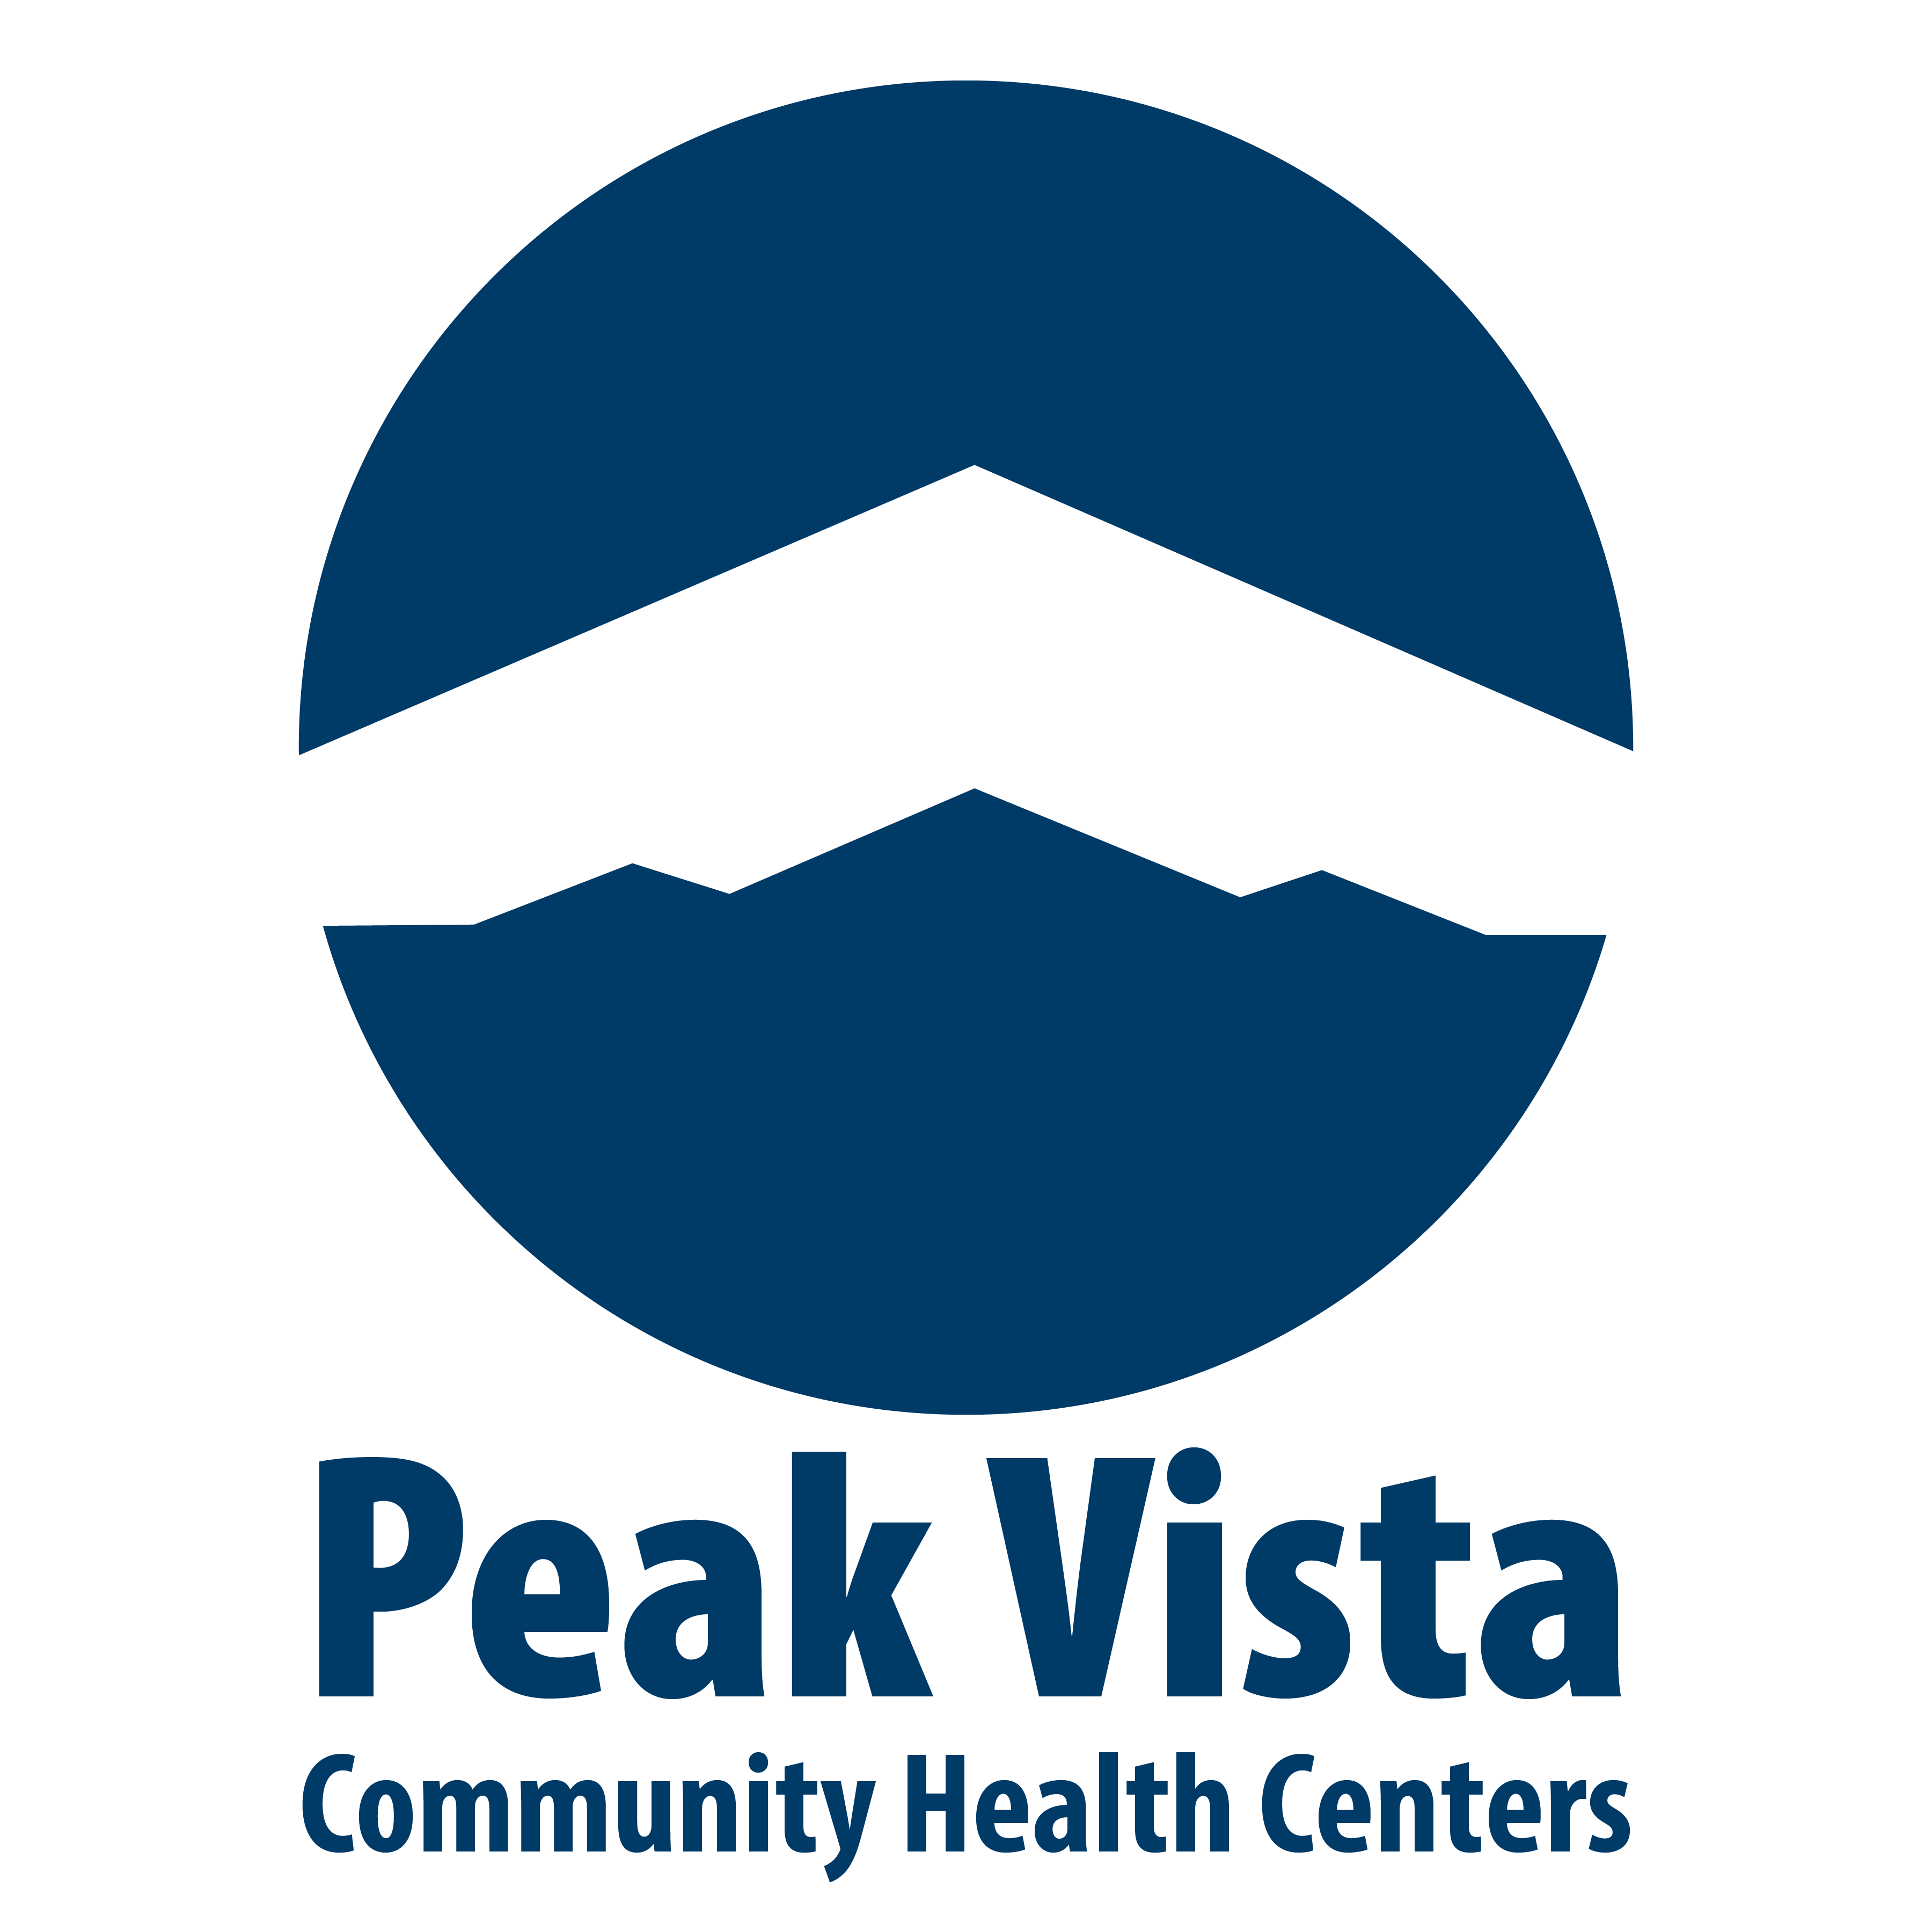 Peak Vista Community Health Centers news via FlashAlert.Net